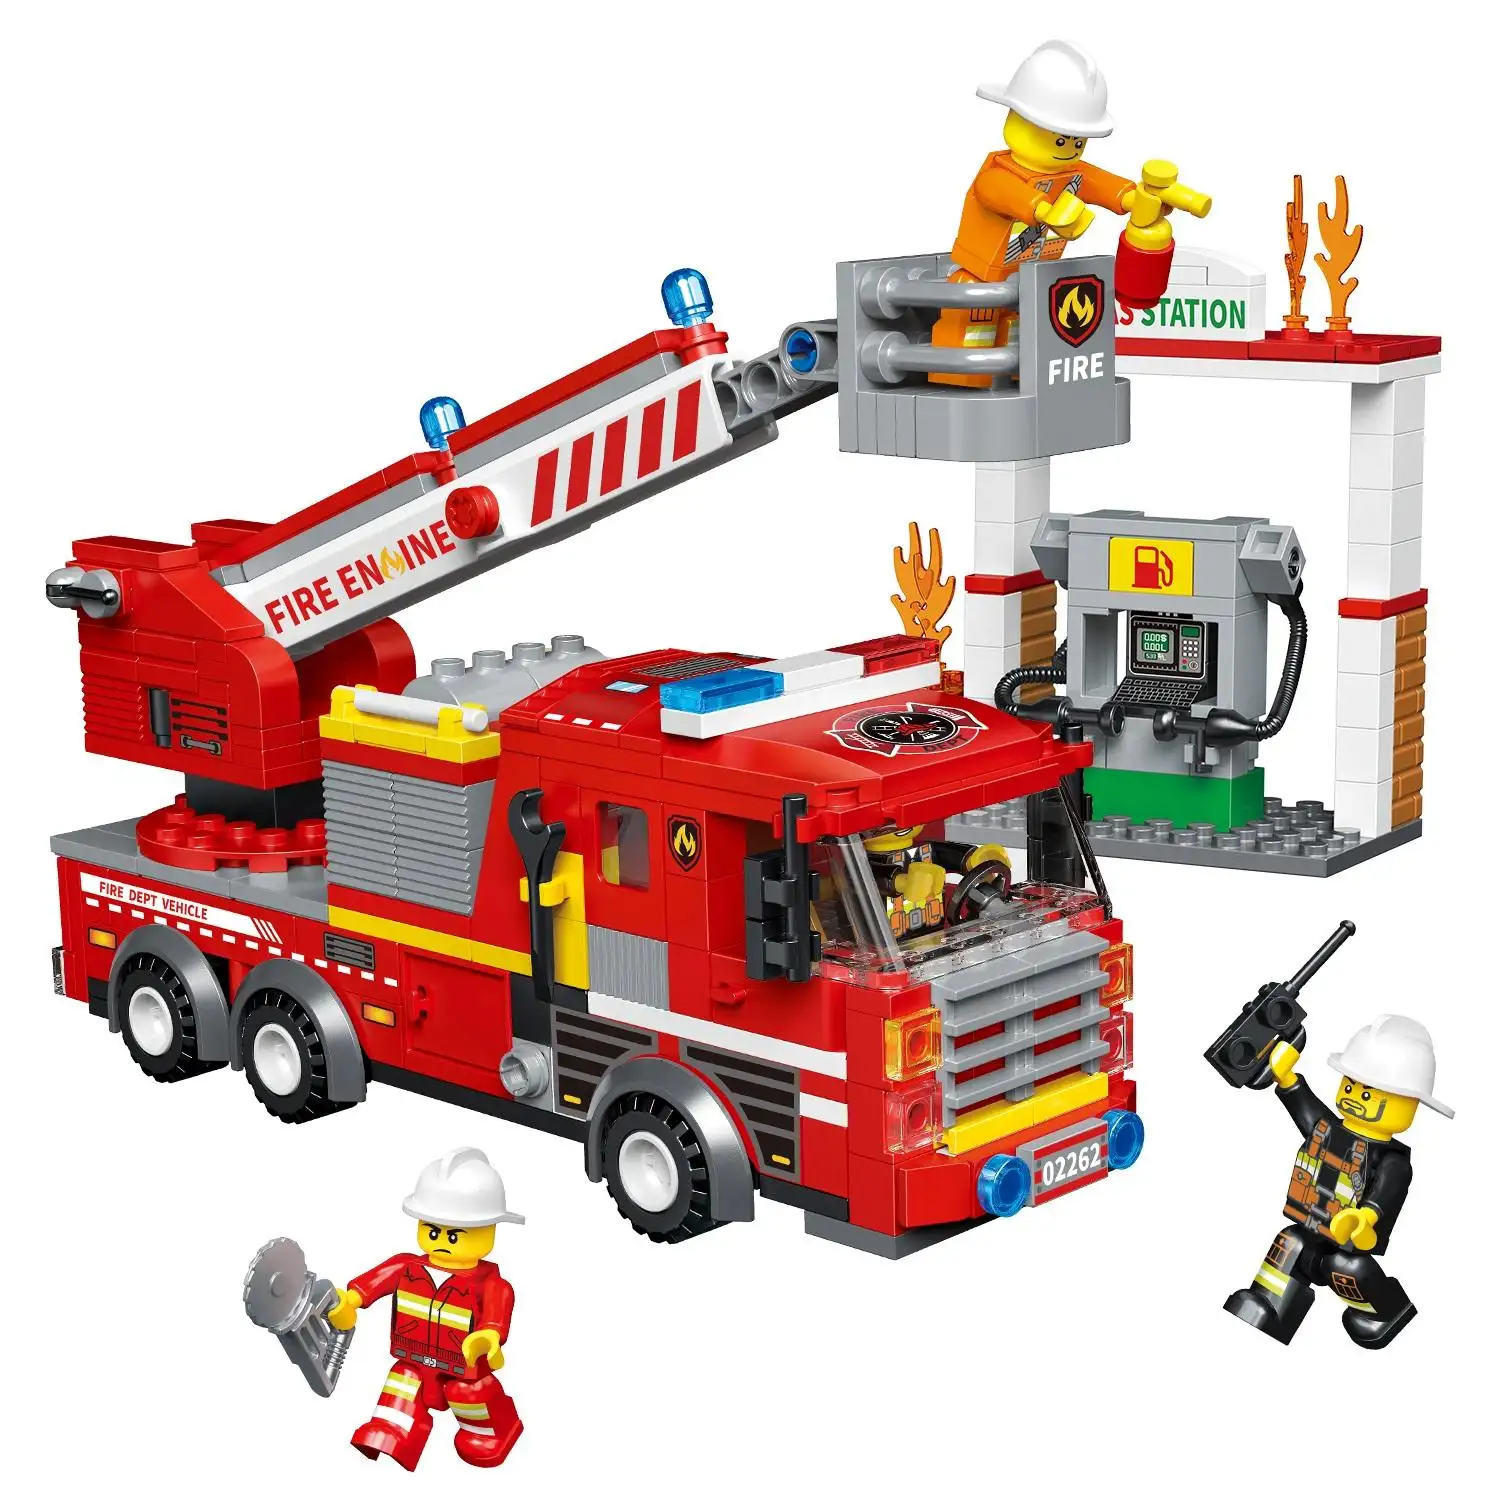 Zhegao City Fire Fight Truck Toy Building Blocks Model Fire Ladder Truck 60107 Bricks Sets